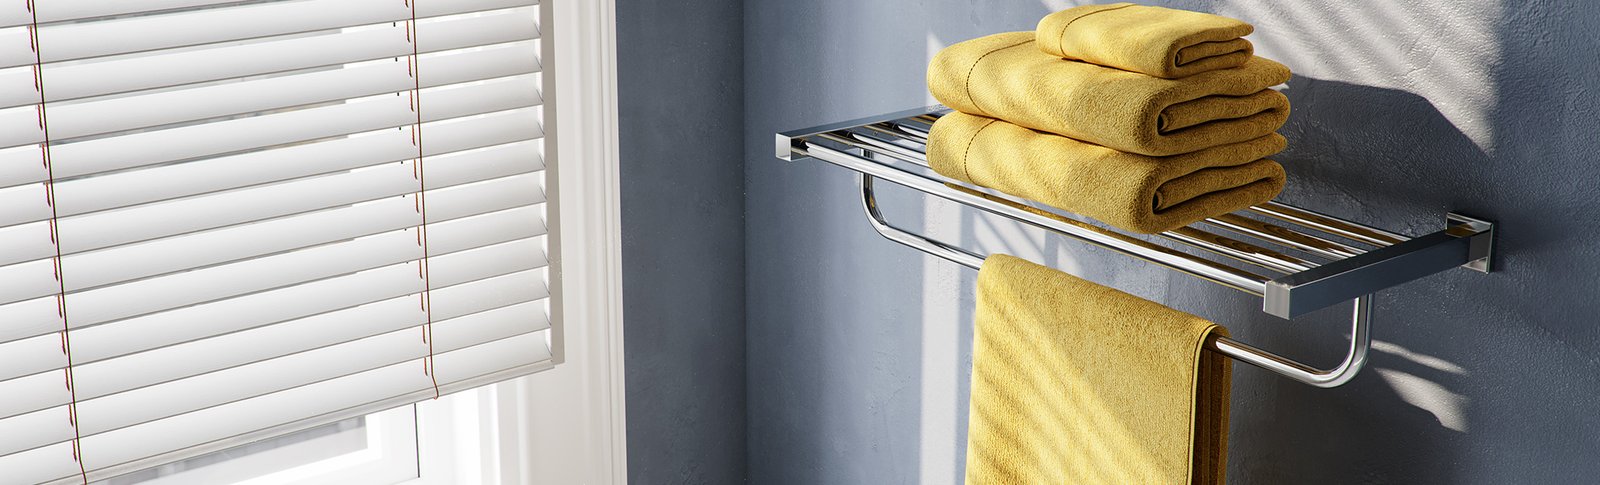 8500 Series bathroom accessories towel shelf with hang bar